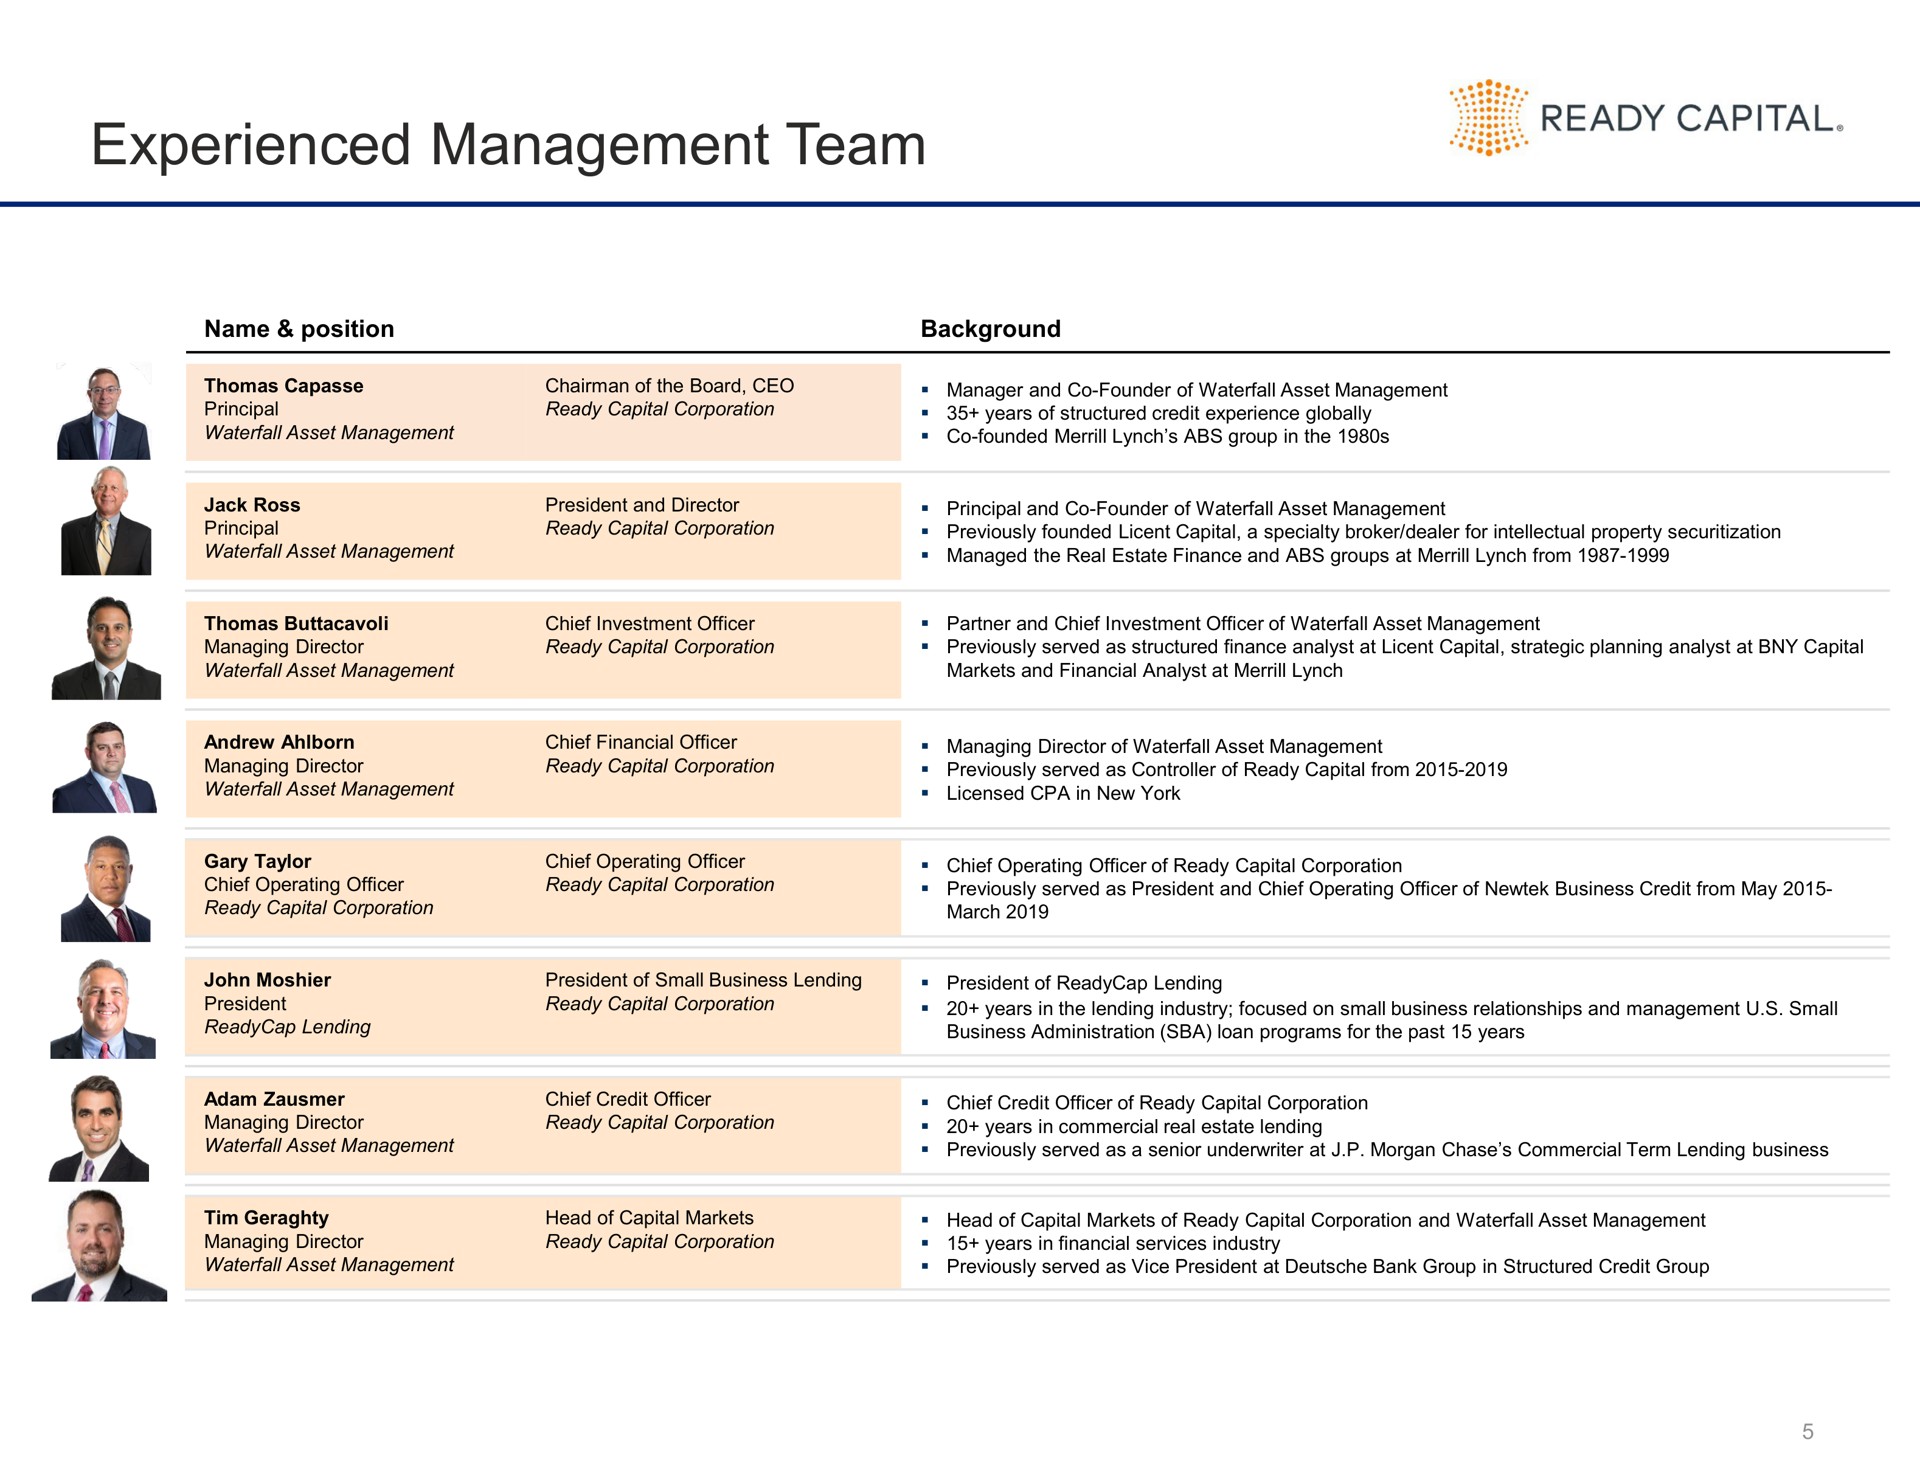 experienced management team ready capital | Ready Capital